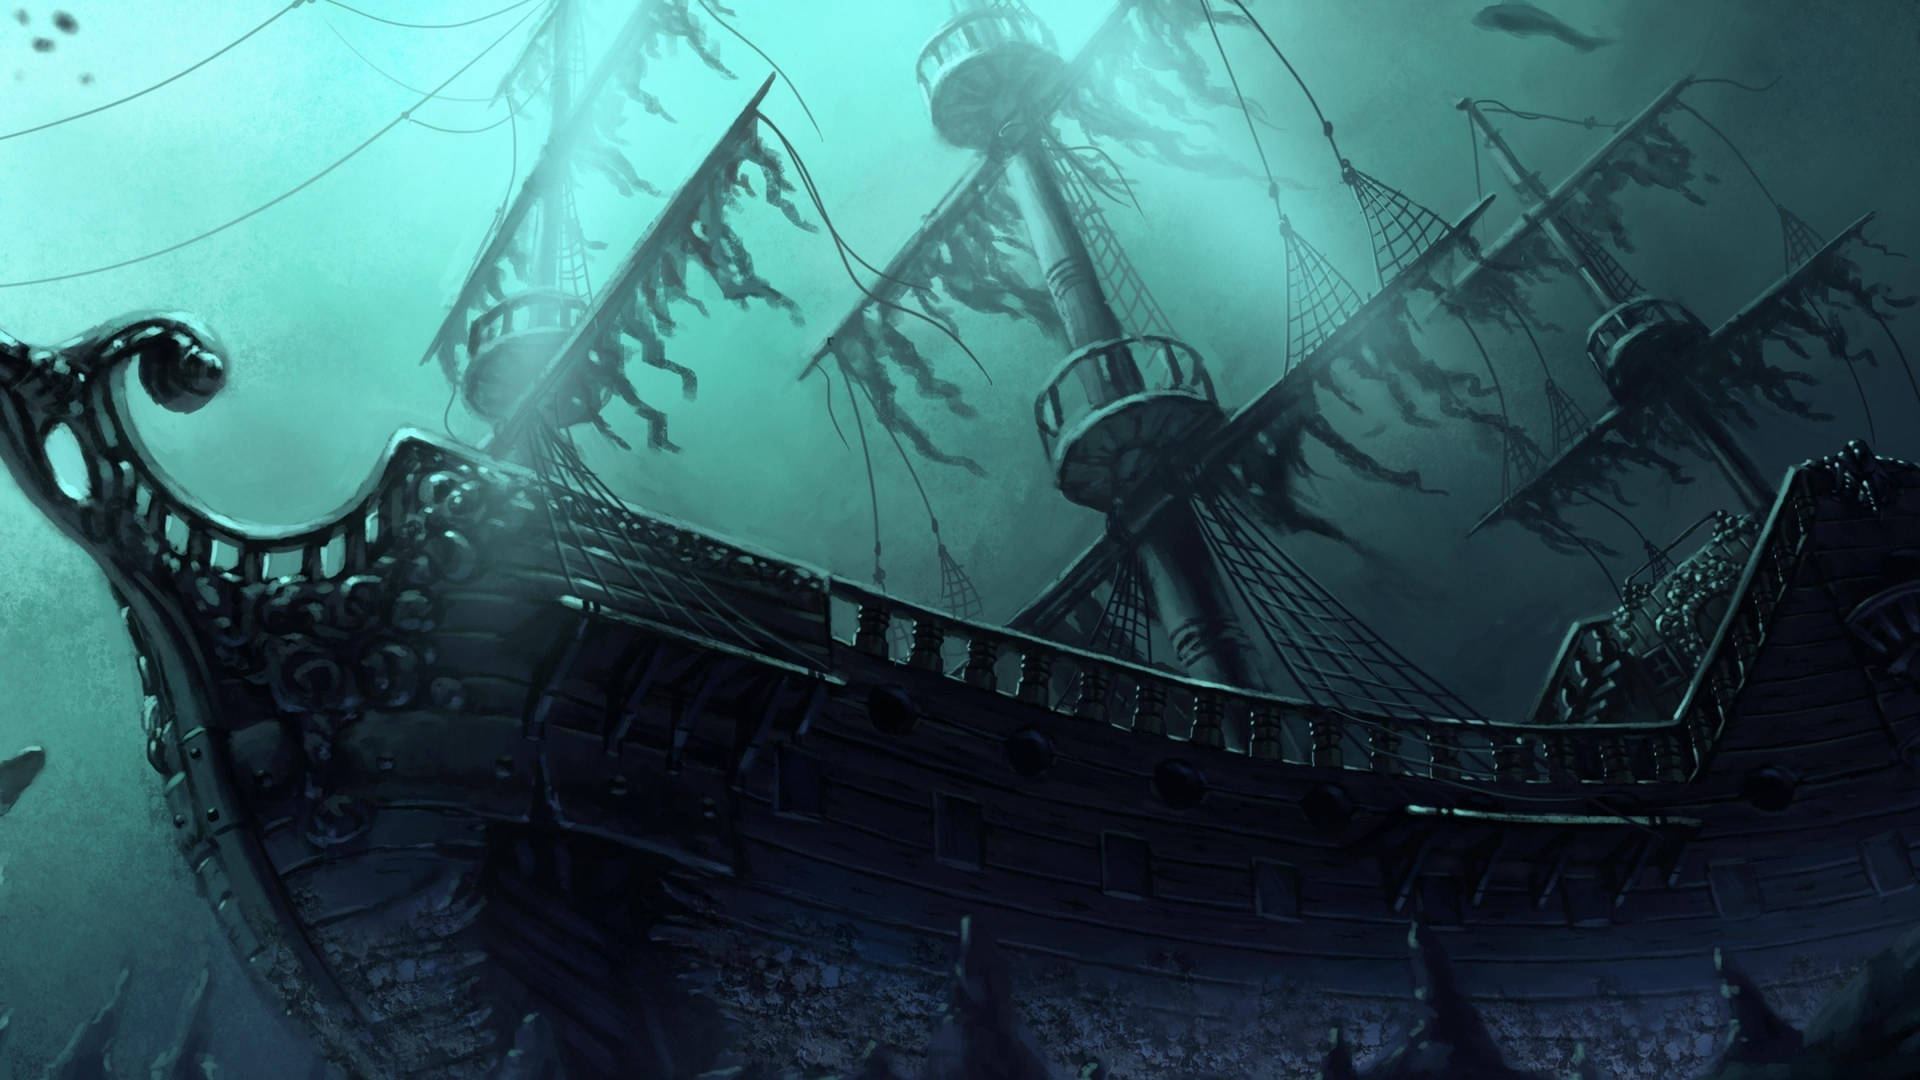 Download 4k Pirate Ship Abandoned Underwater Wallpaper 